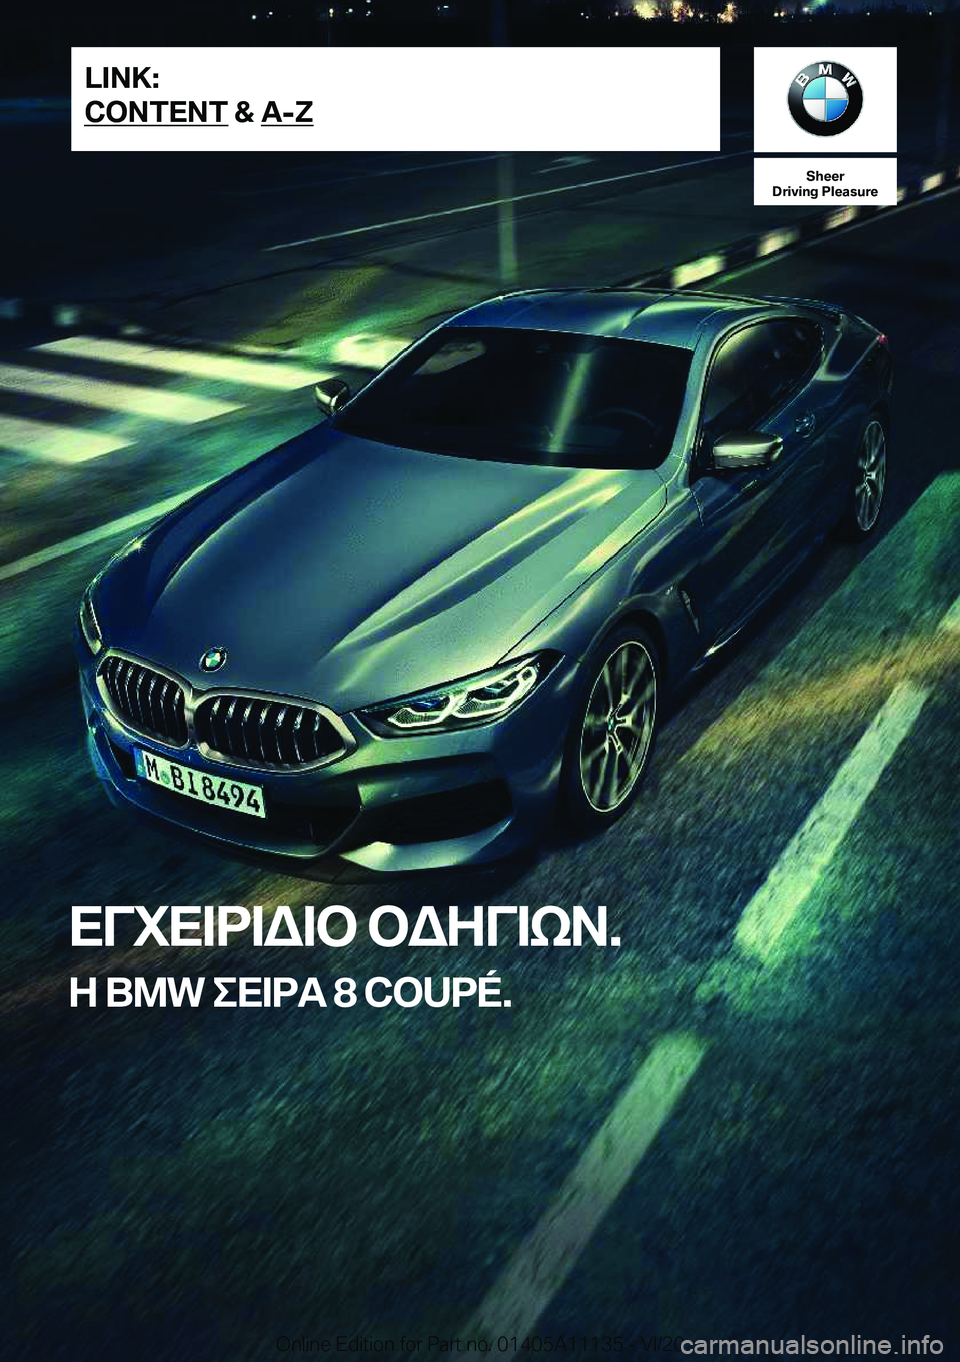 BMW 8 SERIES COUPE 2021  ΟΔΗΓΌΣ ΧΡΉΣΗΣ (in Greek) �S�h�e�e�r
�D�r�i�v�i�n�g��P�l�e�a�s�u�r�e
XViX=d=W=b�bWZV=kA�.
Z��B�M�W�eX=dT��8��C�O�U�P�